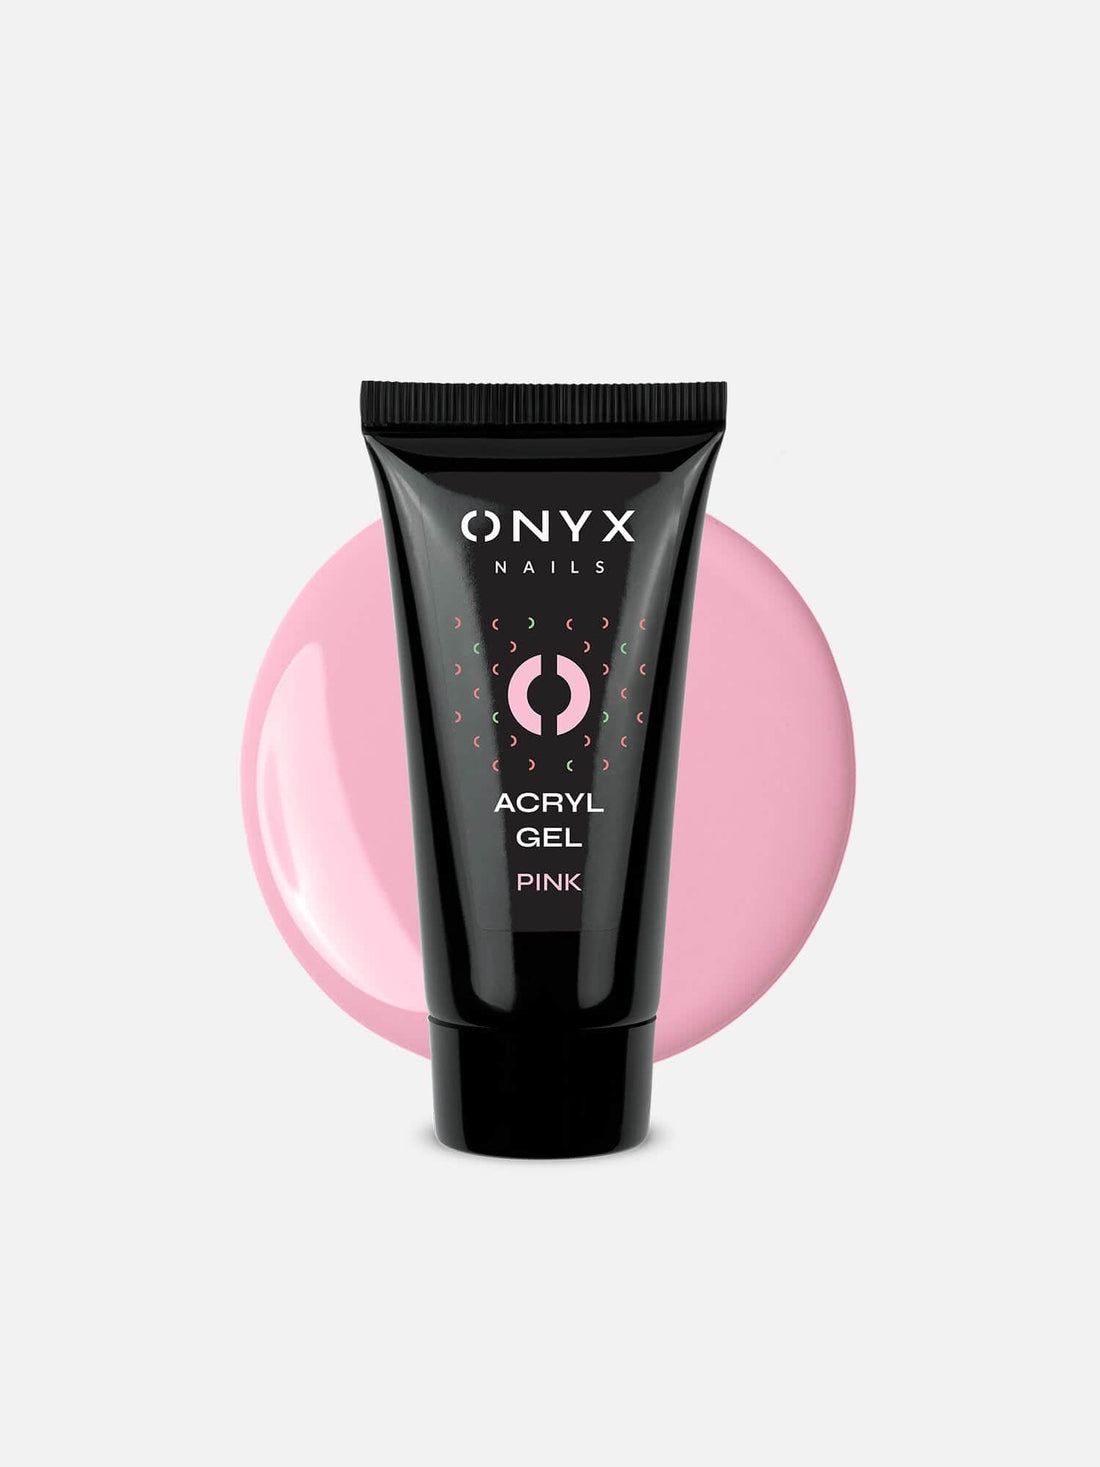 Onyx Nails AcrylGel Pink 30 g